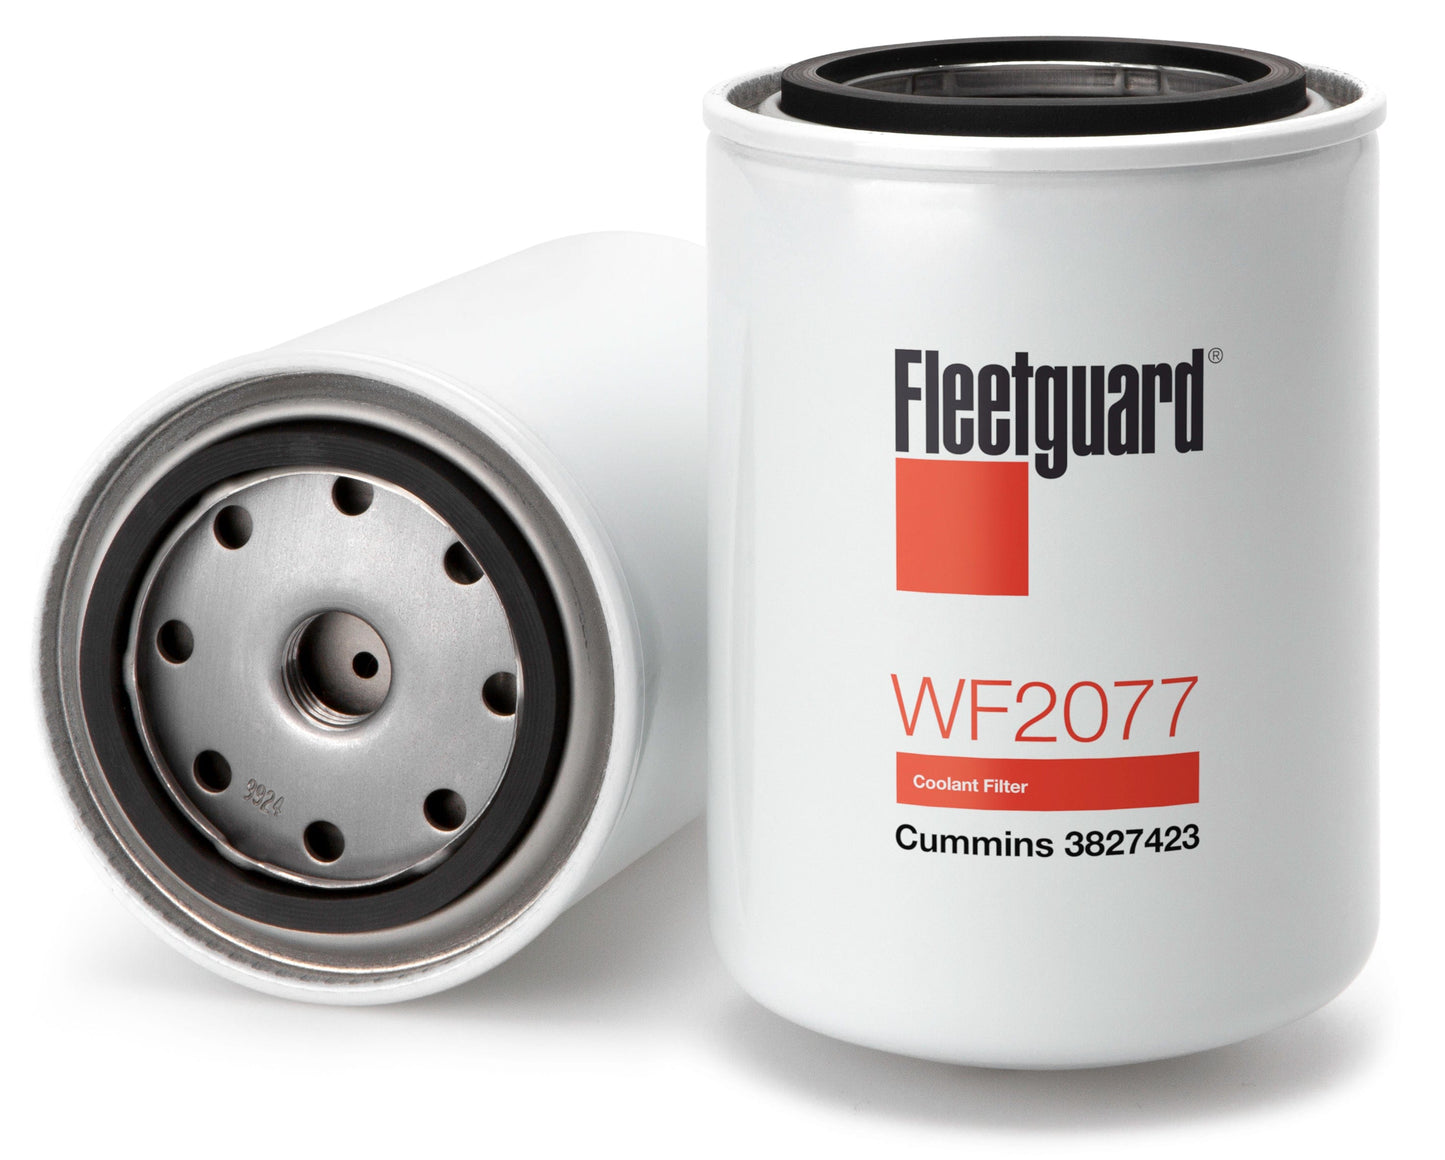 Fleetguard Water Filter (Spin On) - Fleetguard WF2077